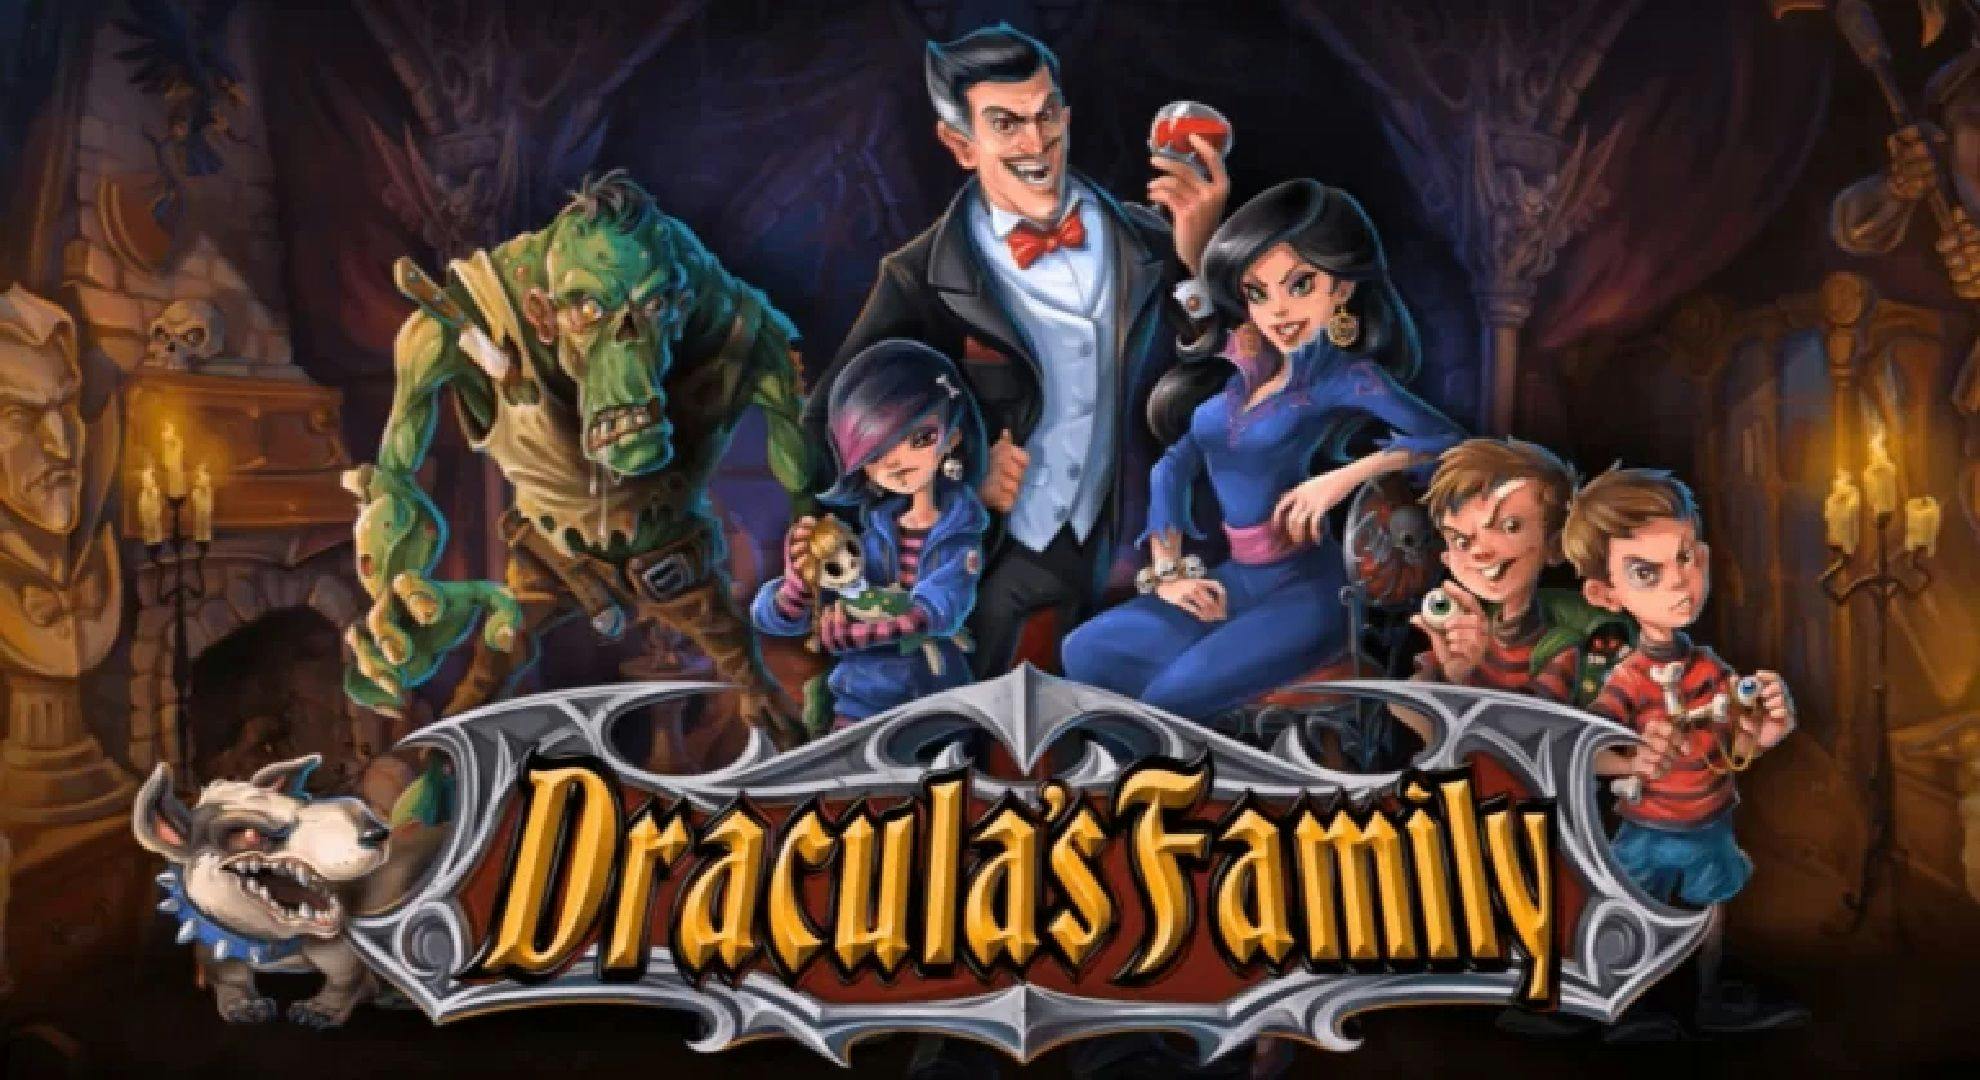 Dracula's Family Slot Online Free Play